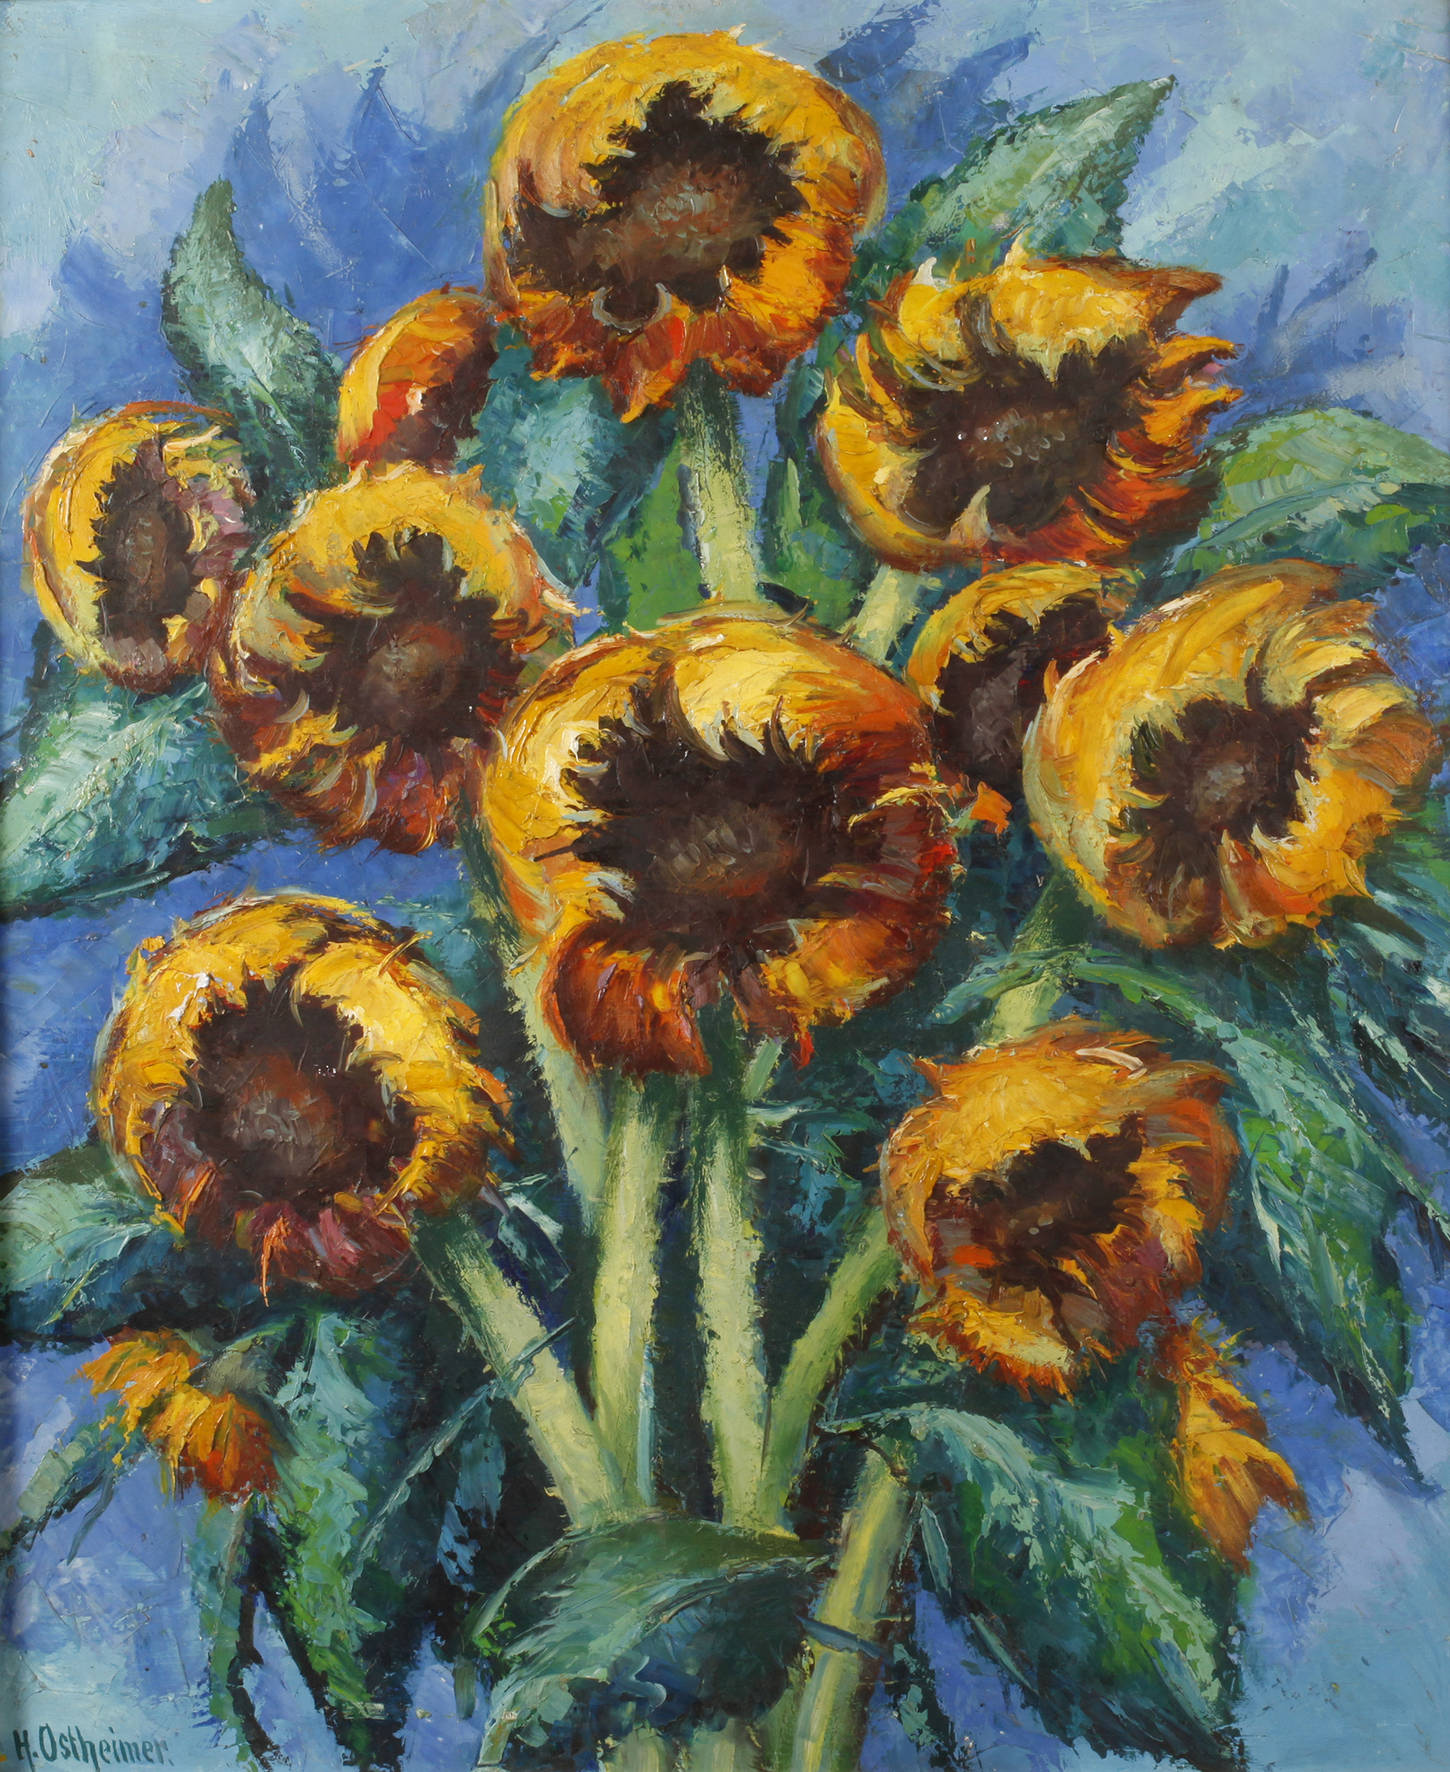 H. Ostheimer, ”Sonnenblumen”